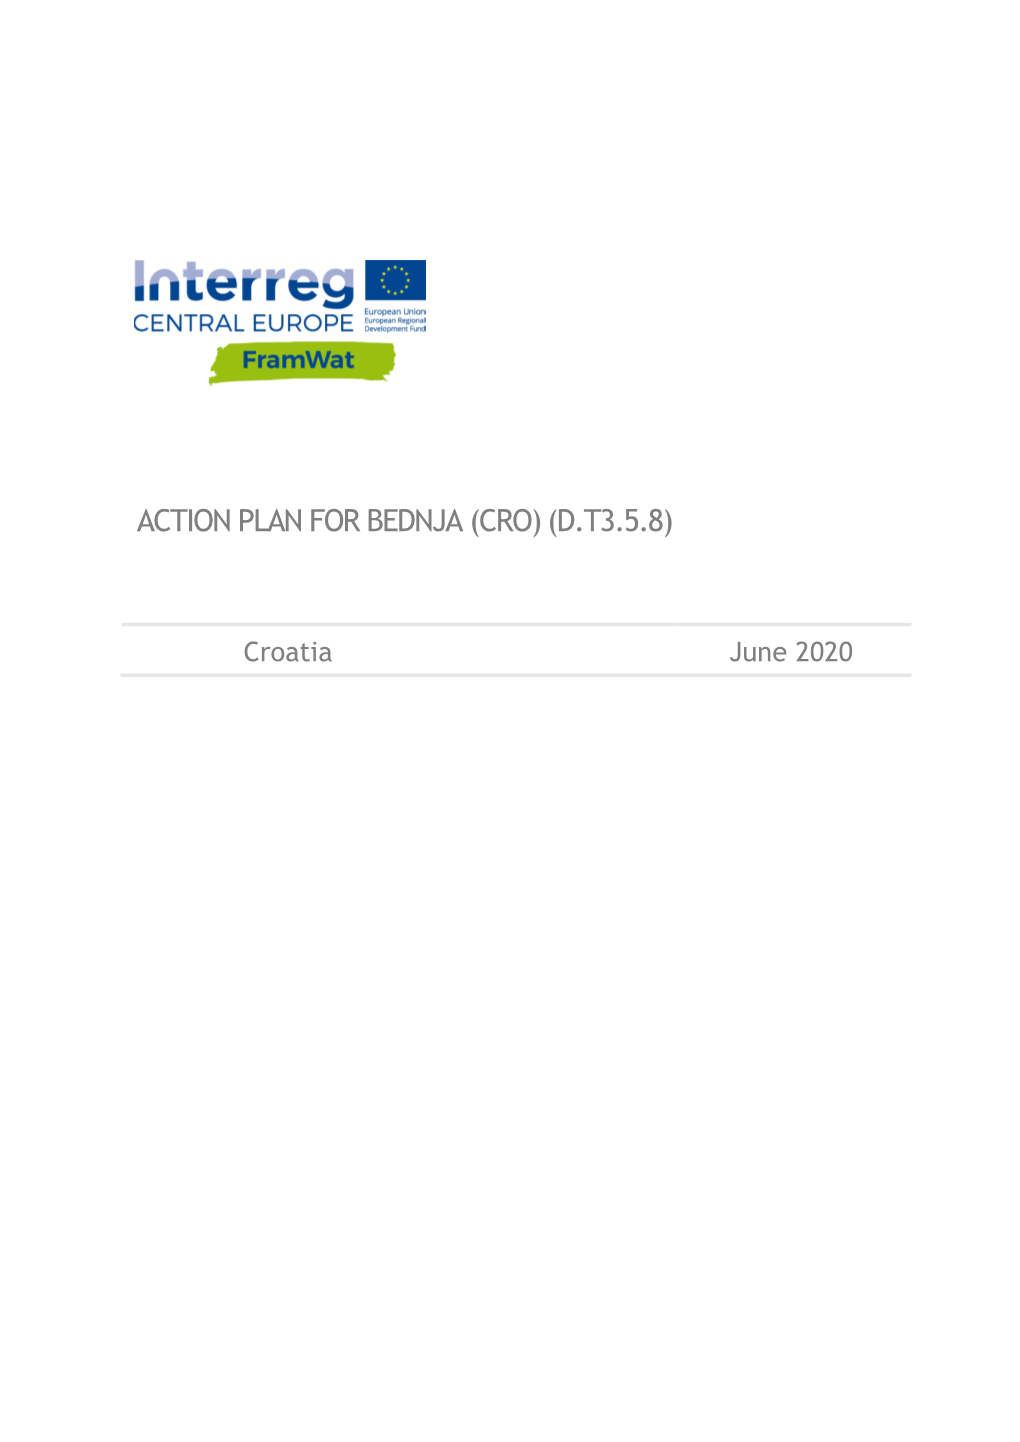 Action Plan for Bednja (Cro) (D.T3.5.8)